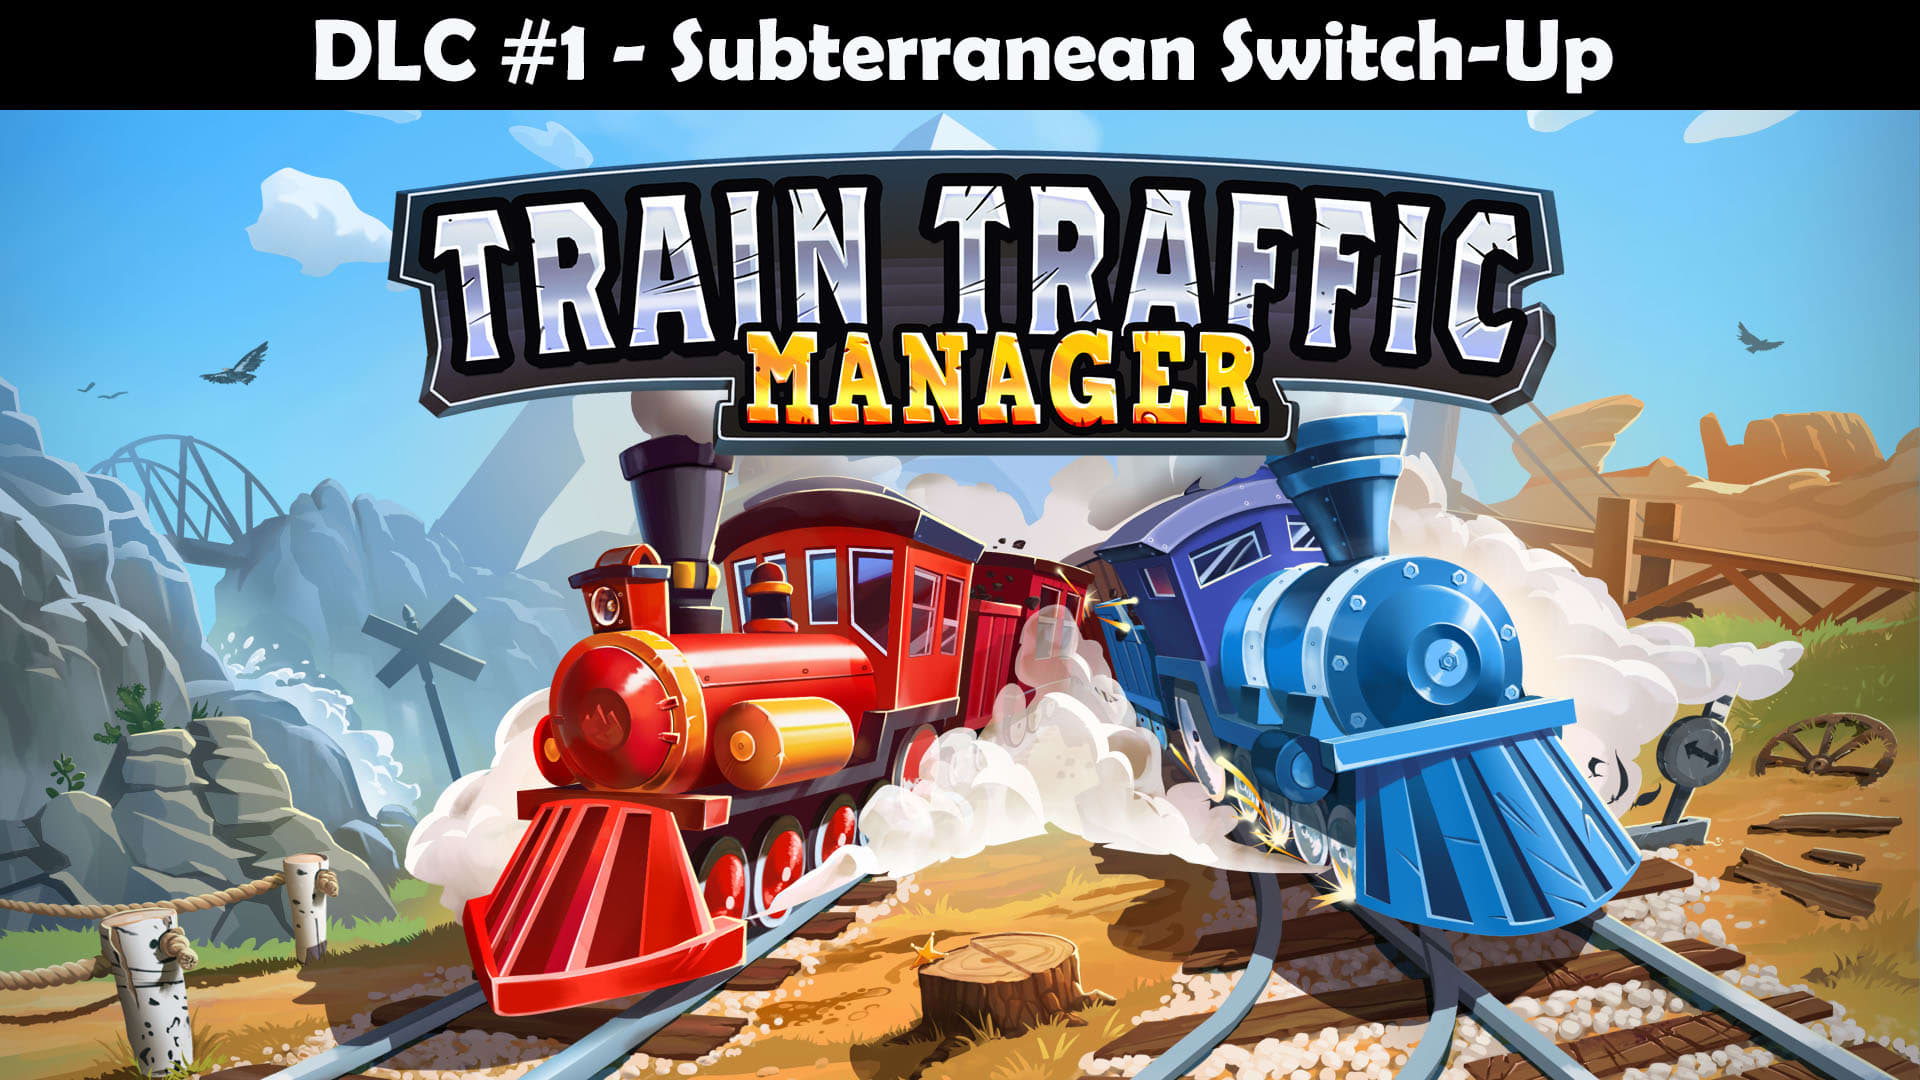 Train Traffic Manager DLC #1 - Subterranean Switch-Up 1